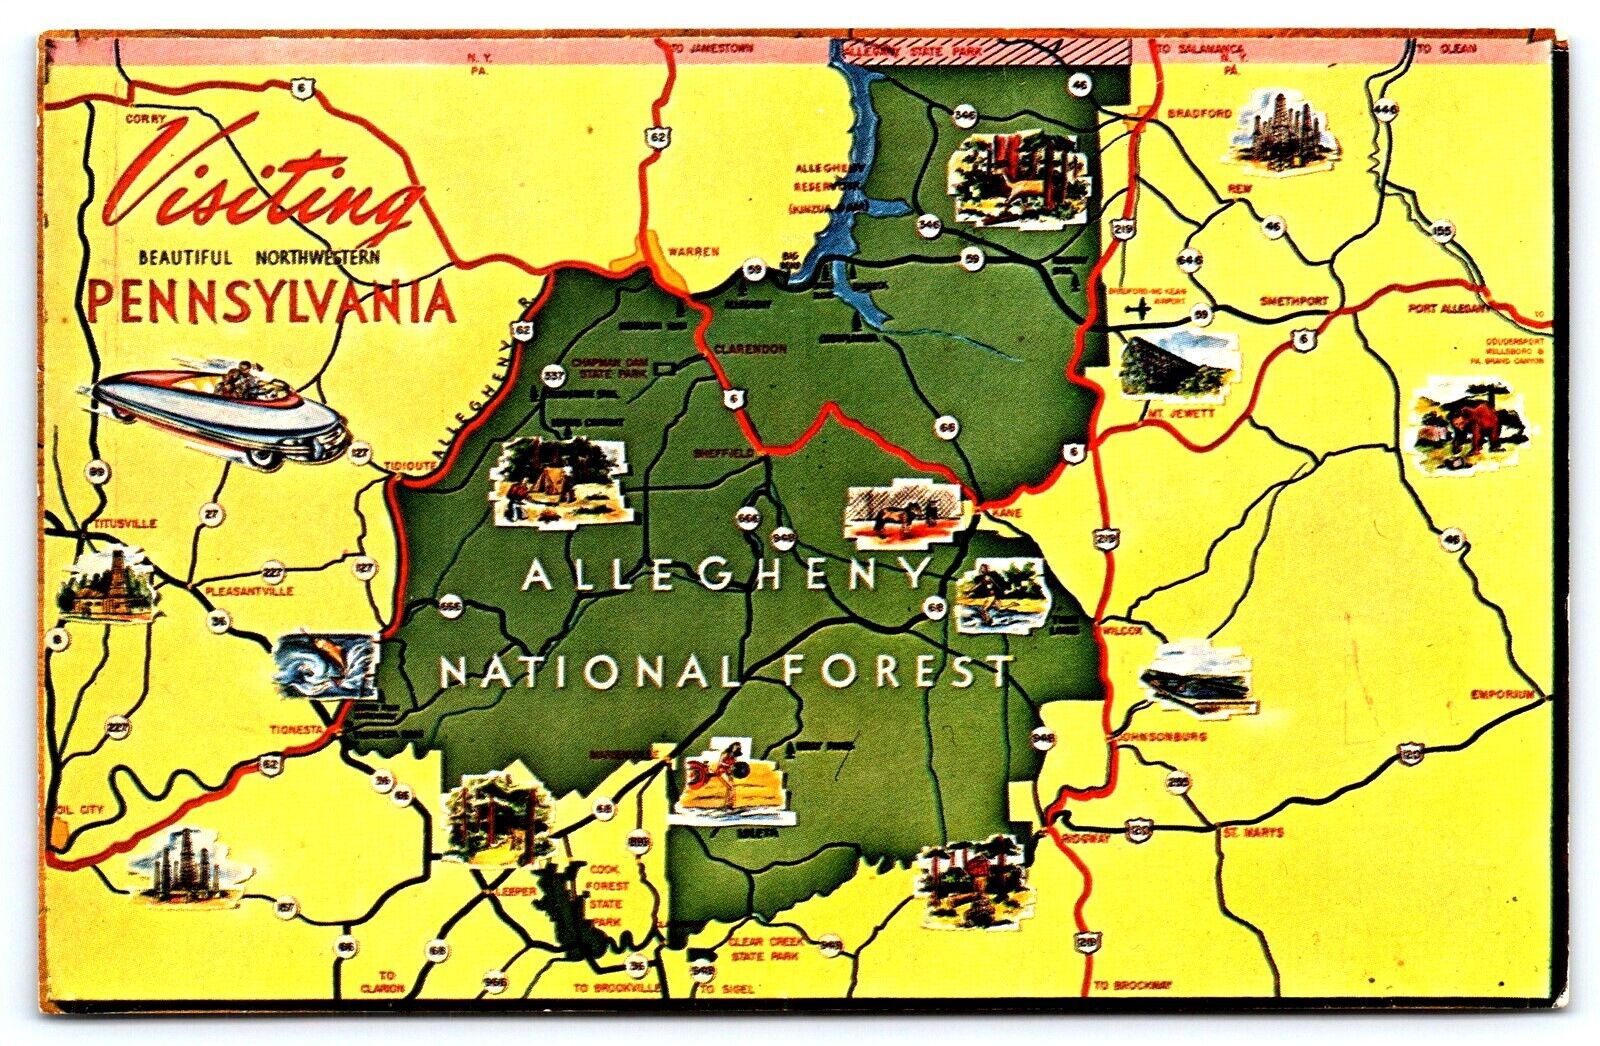 PA Visiting Northwestern PA Novelty Map, Allegheny Nat'l Forest, Chrome Unp